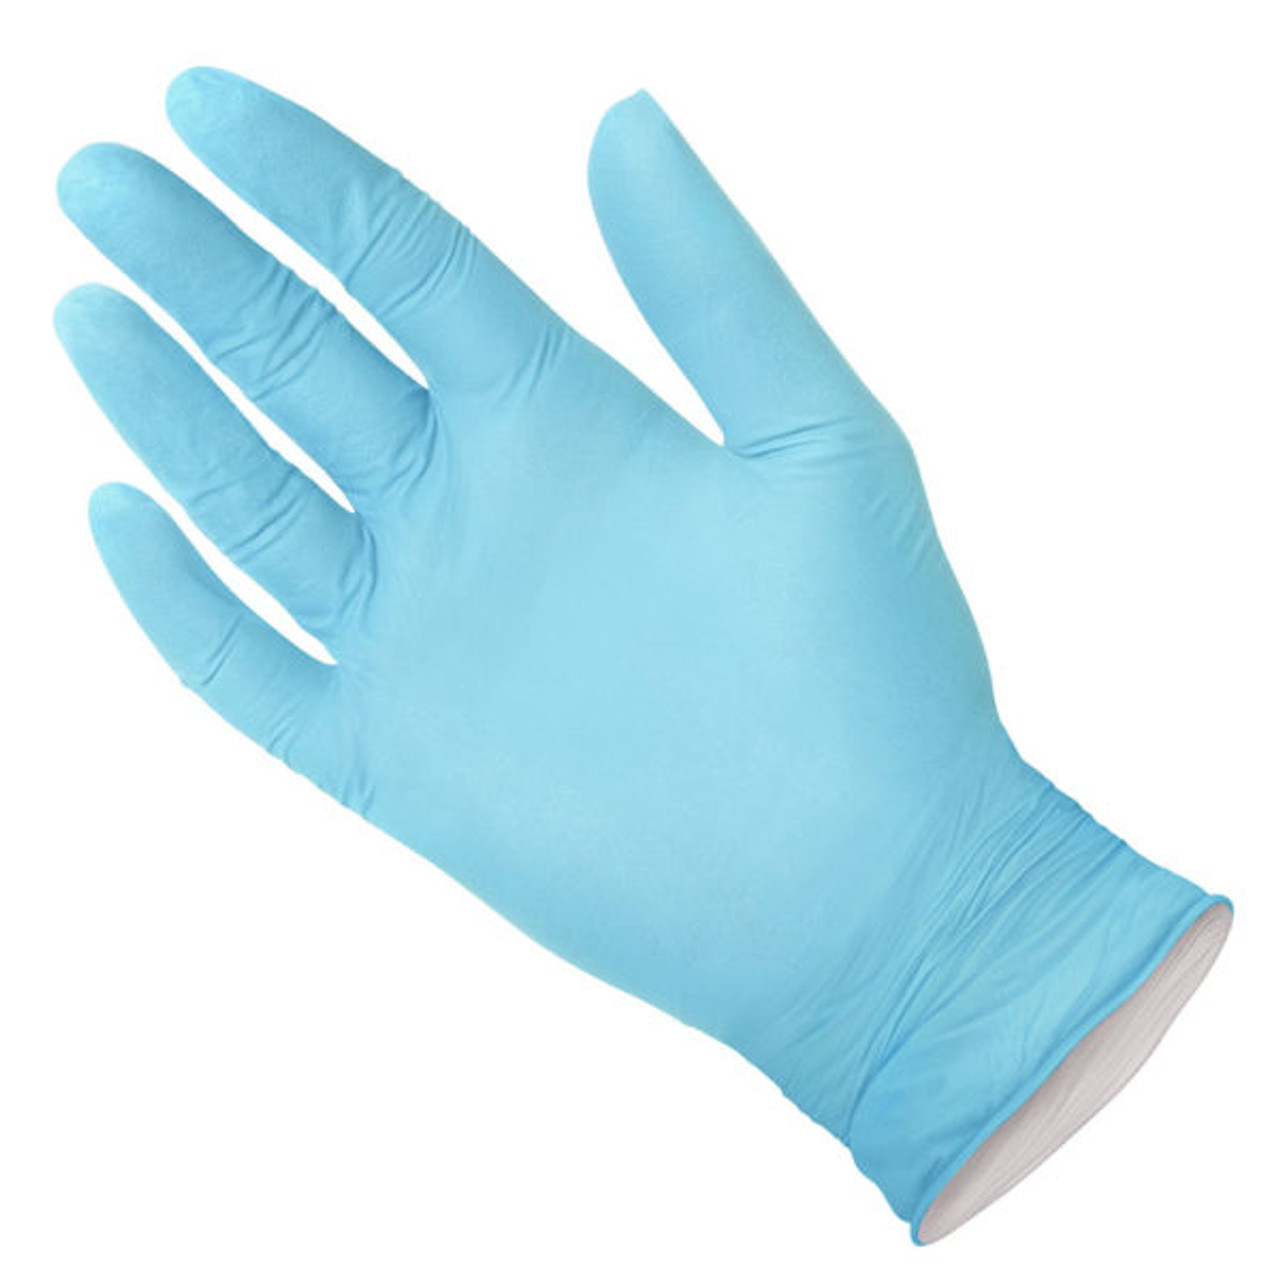 Medgluv Nitriskin Nitrile Exam Glove, 5ml Chemo & Fentayl Tested, Blue, 5.5mil, Medium 100/bx, 10/cs